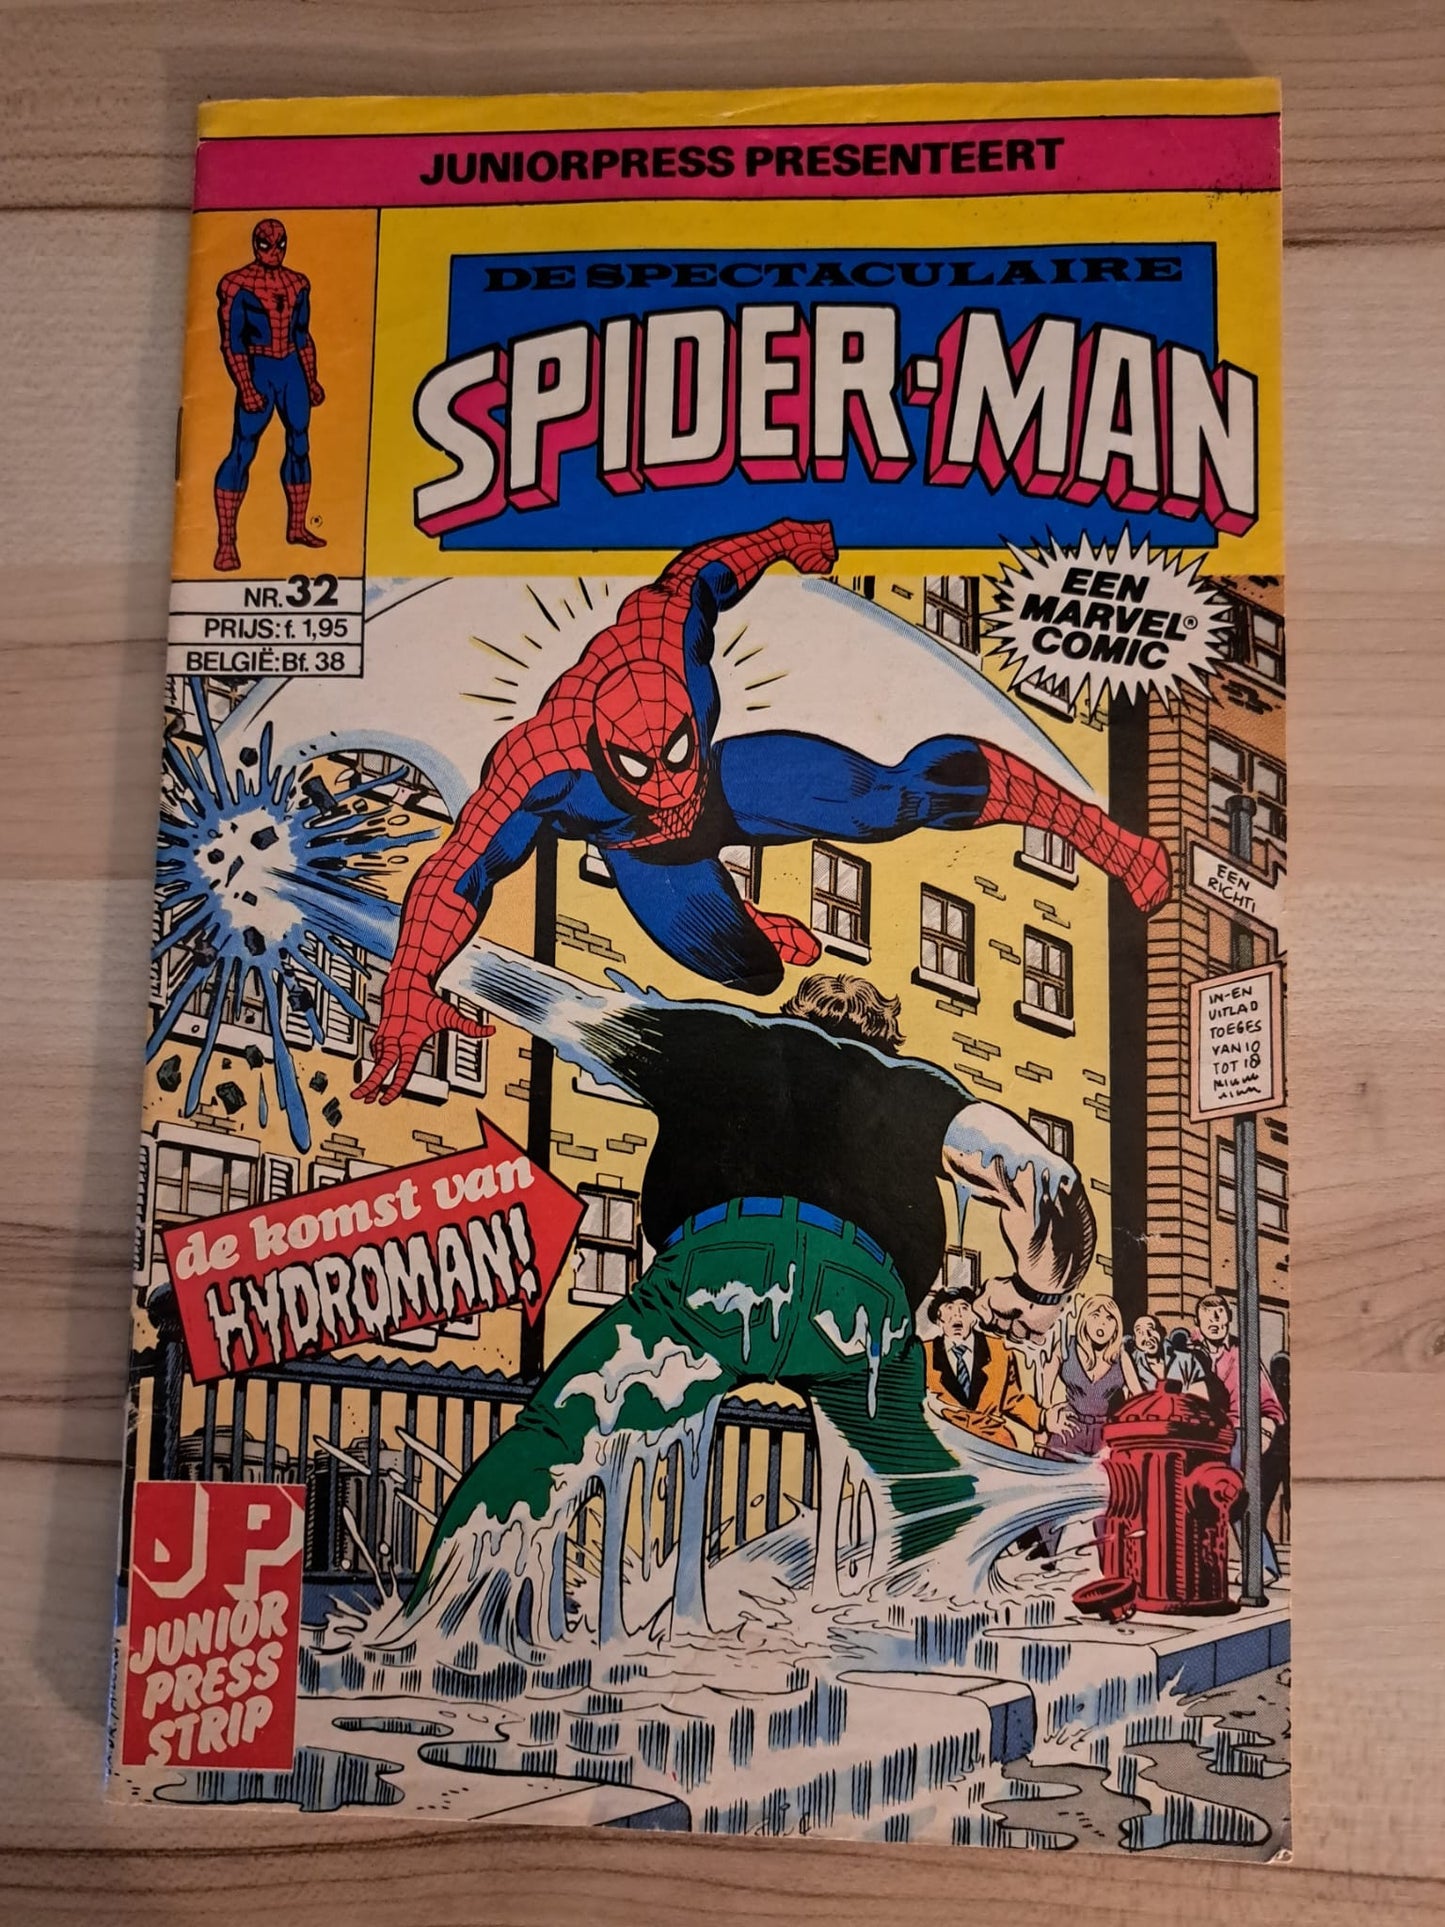 De spektakulaire spiderman #32